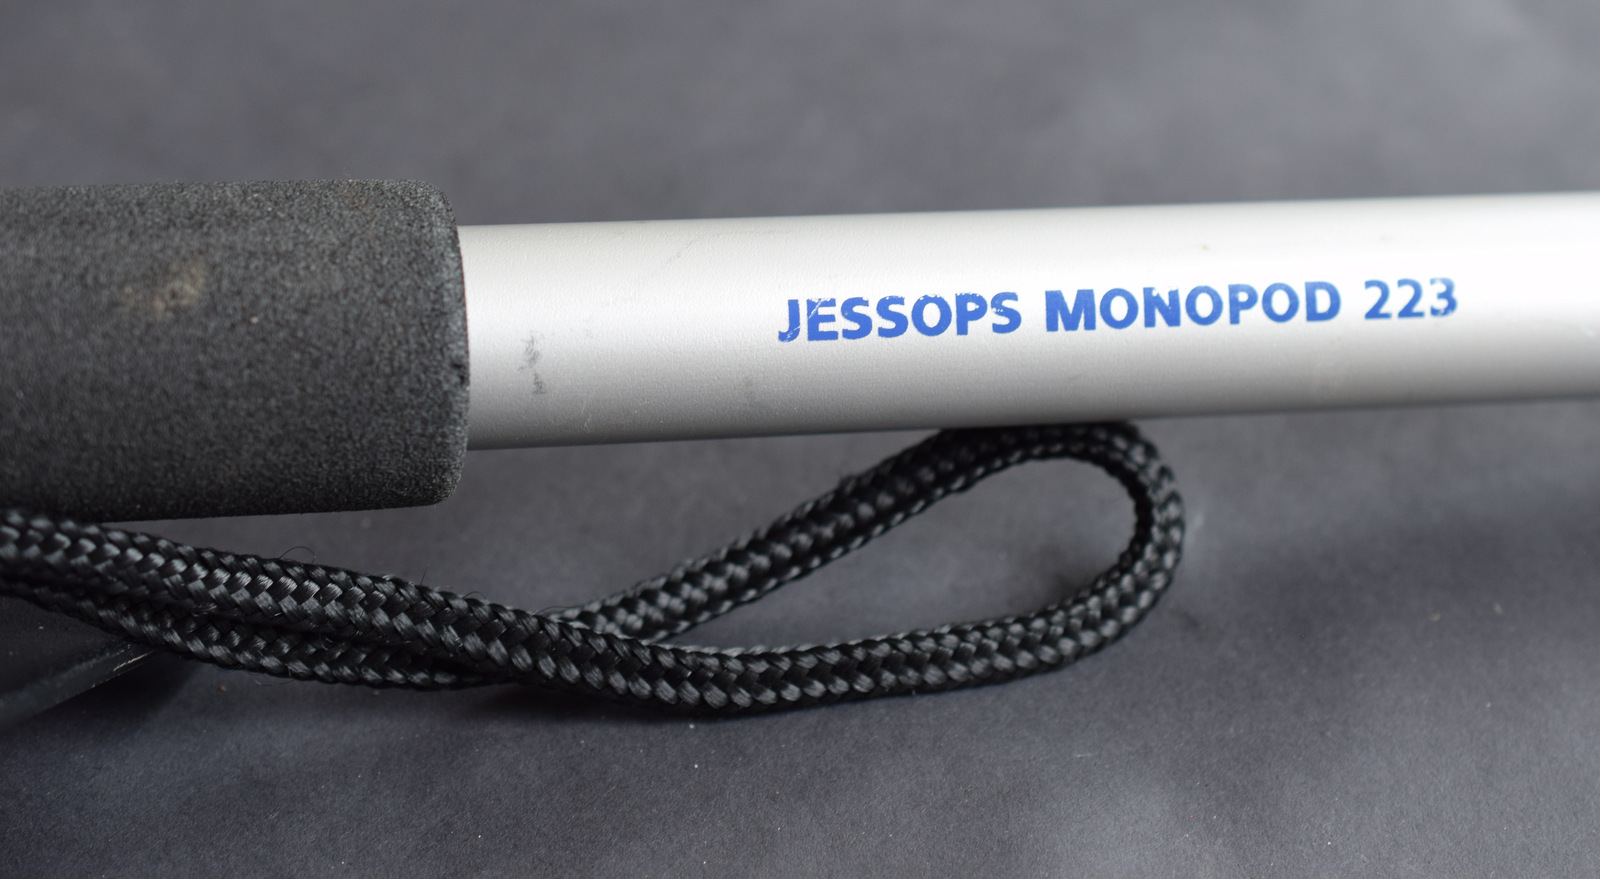 Jessops 223 Lightweight Camera Monopod With Desk Tripod And Hanimex Pan-Tilt Head - Image 4 of 5